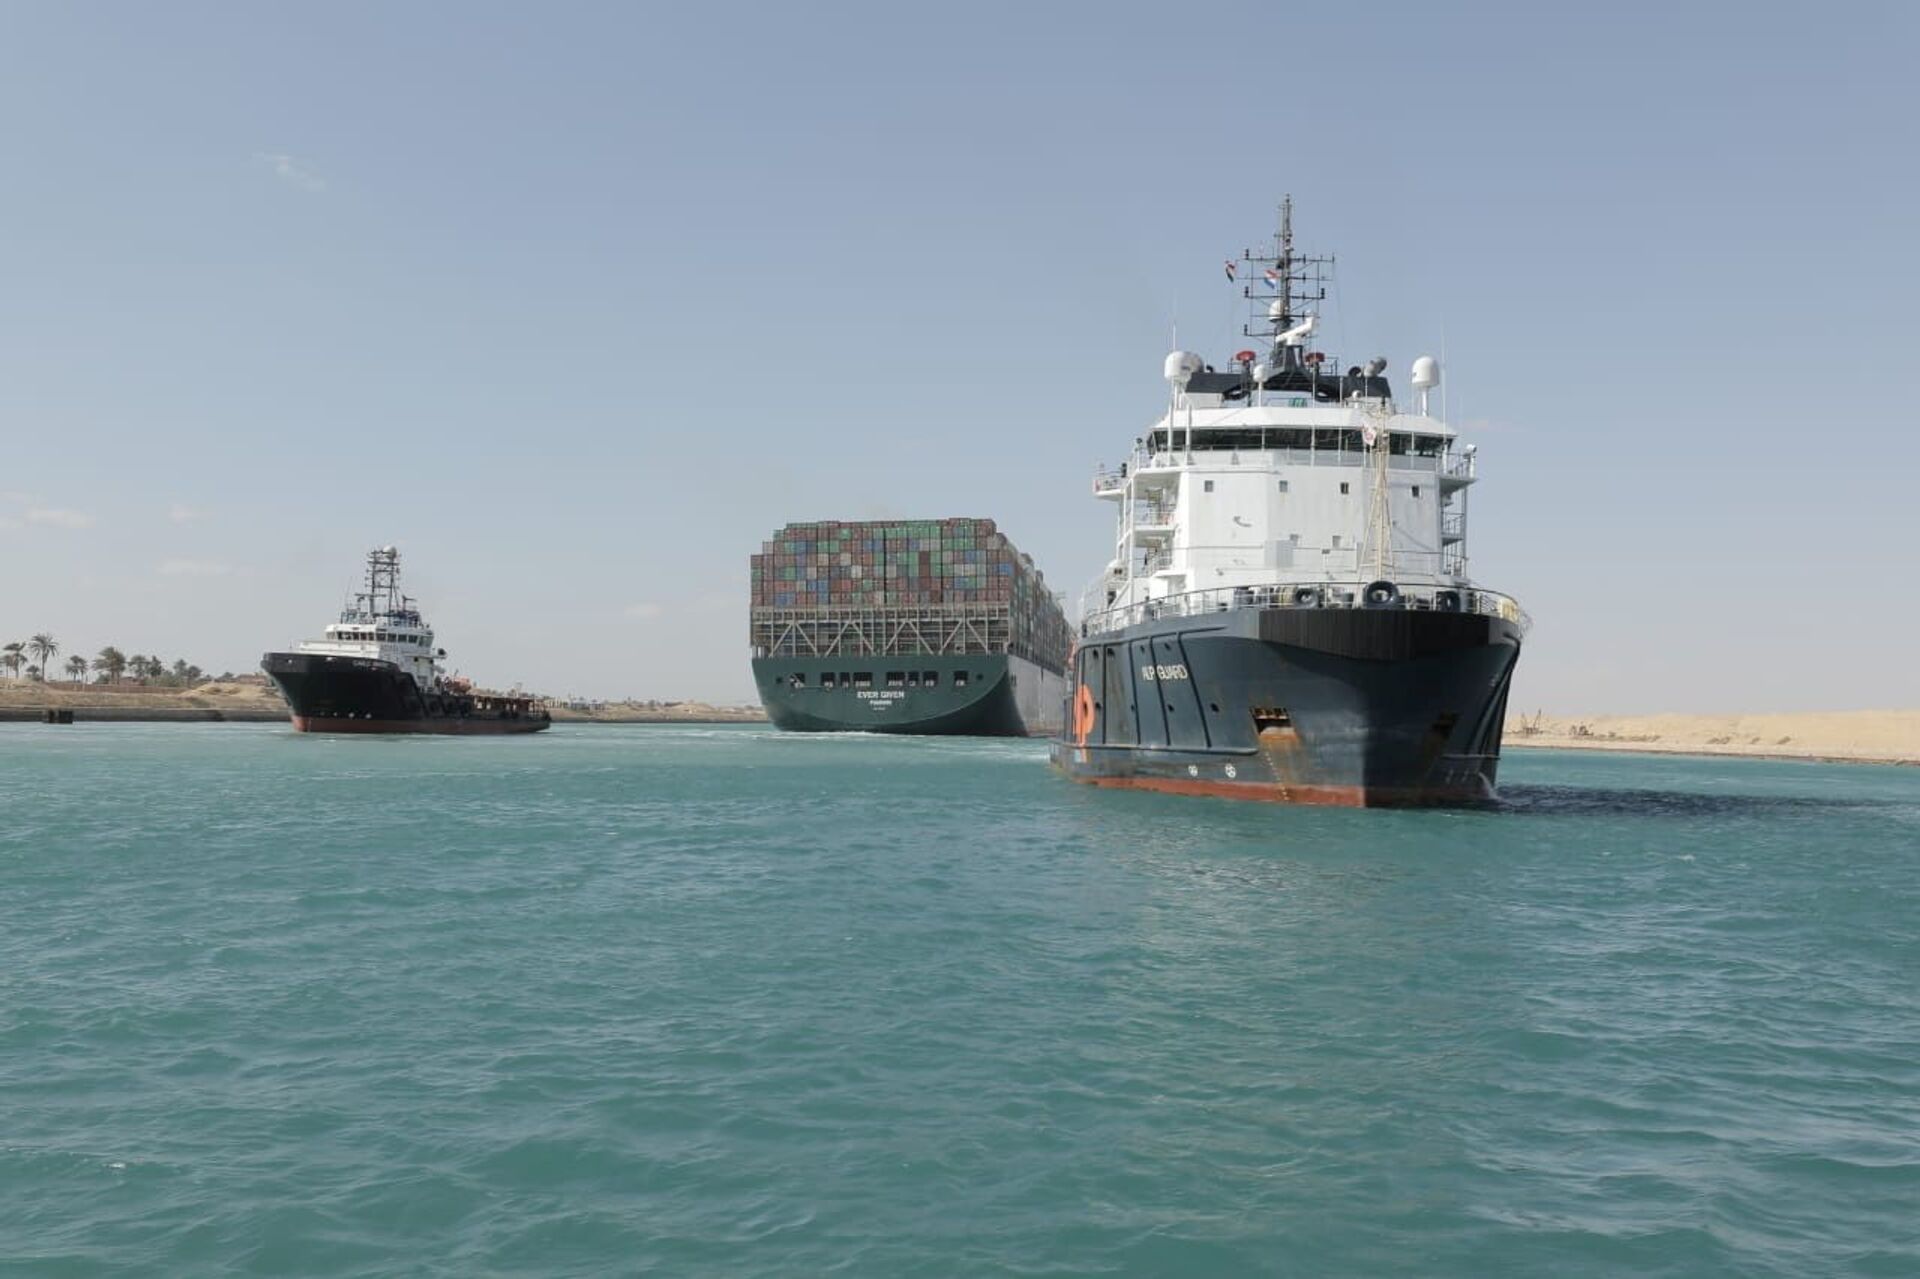 Suez Canal Authority Says Shipping Backlog Cleared - Sputnik International, 1920, 03.04.2021